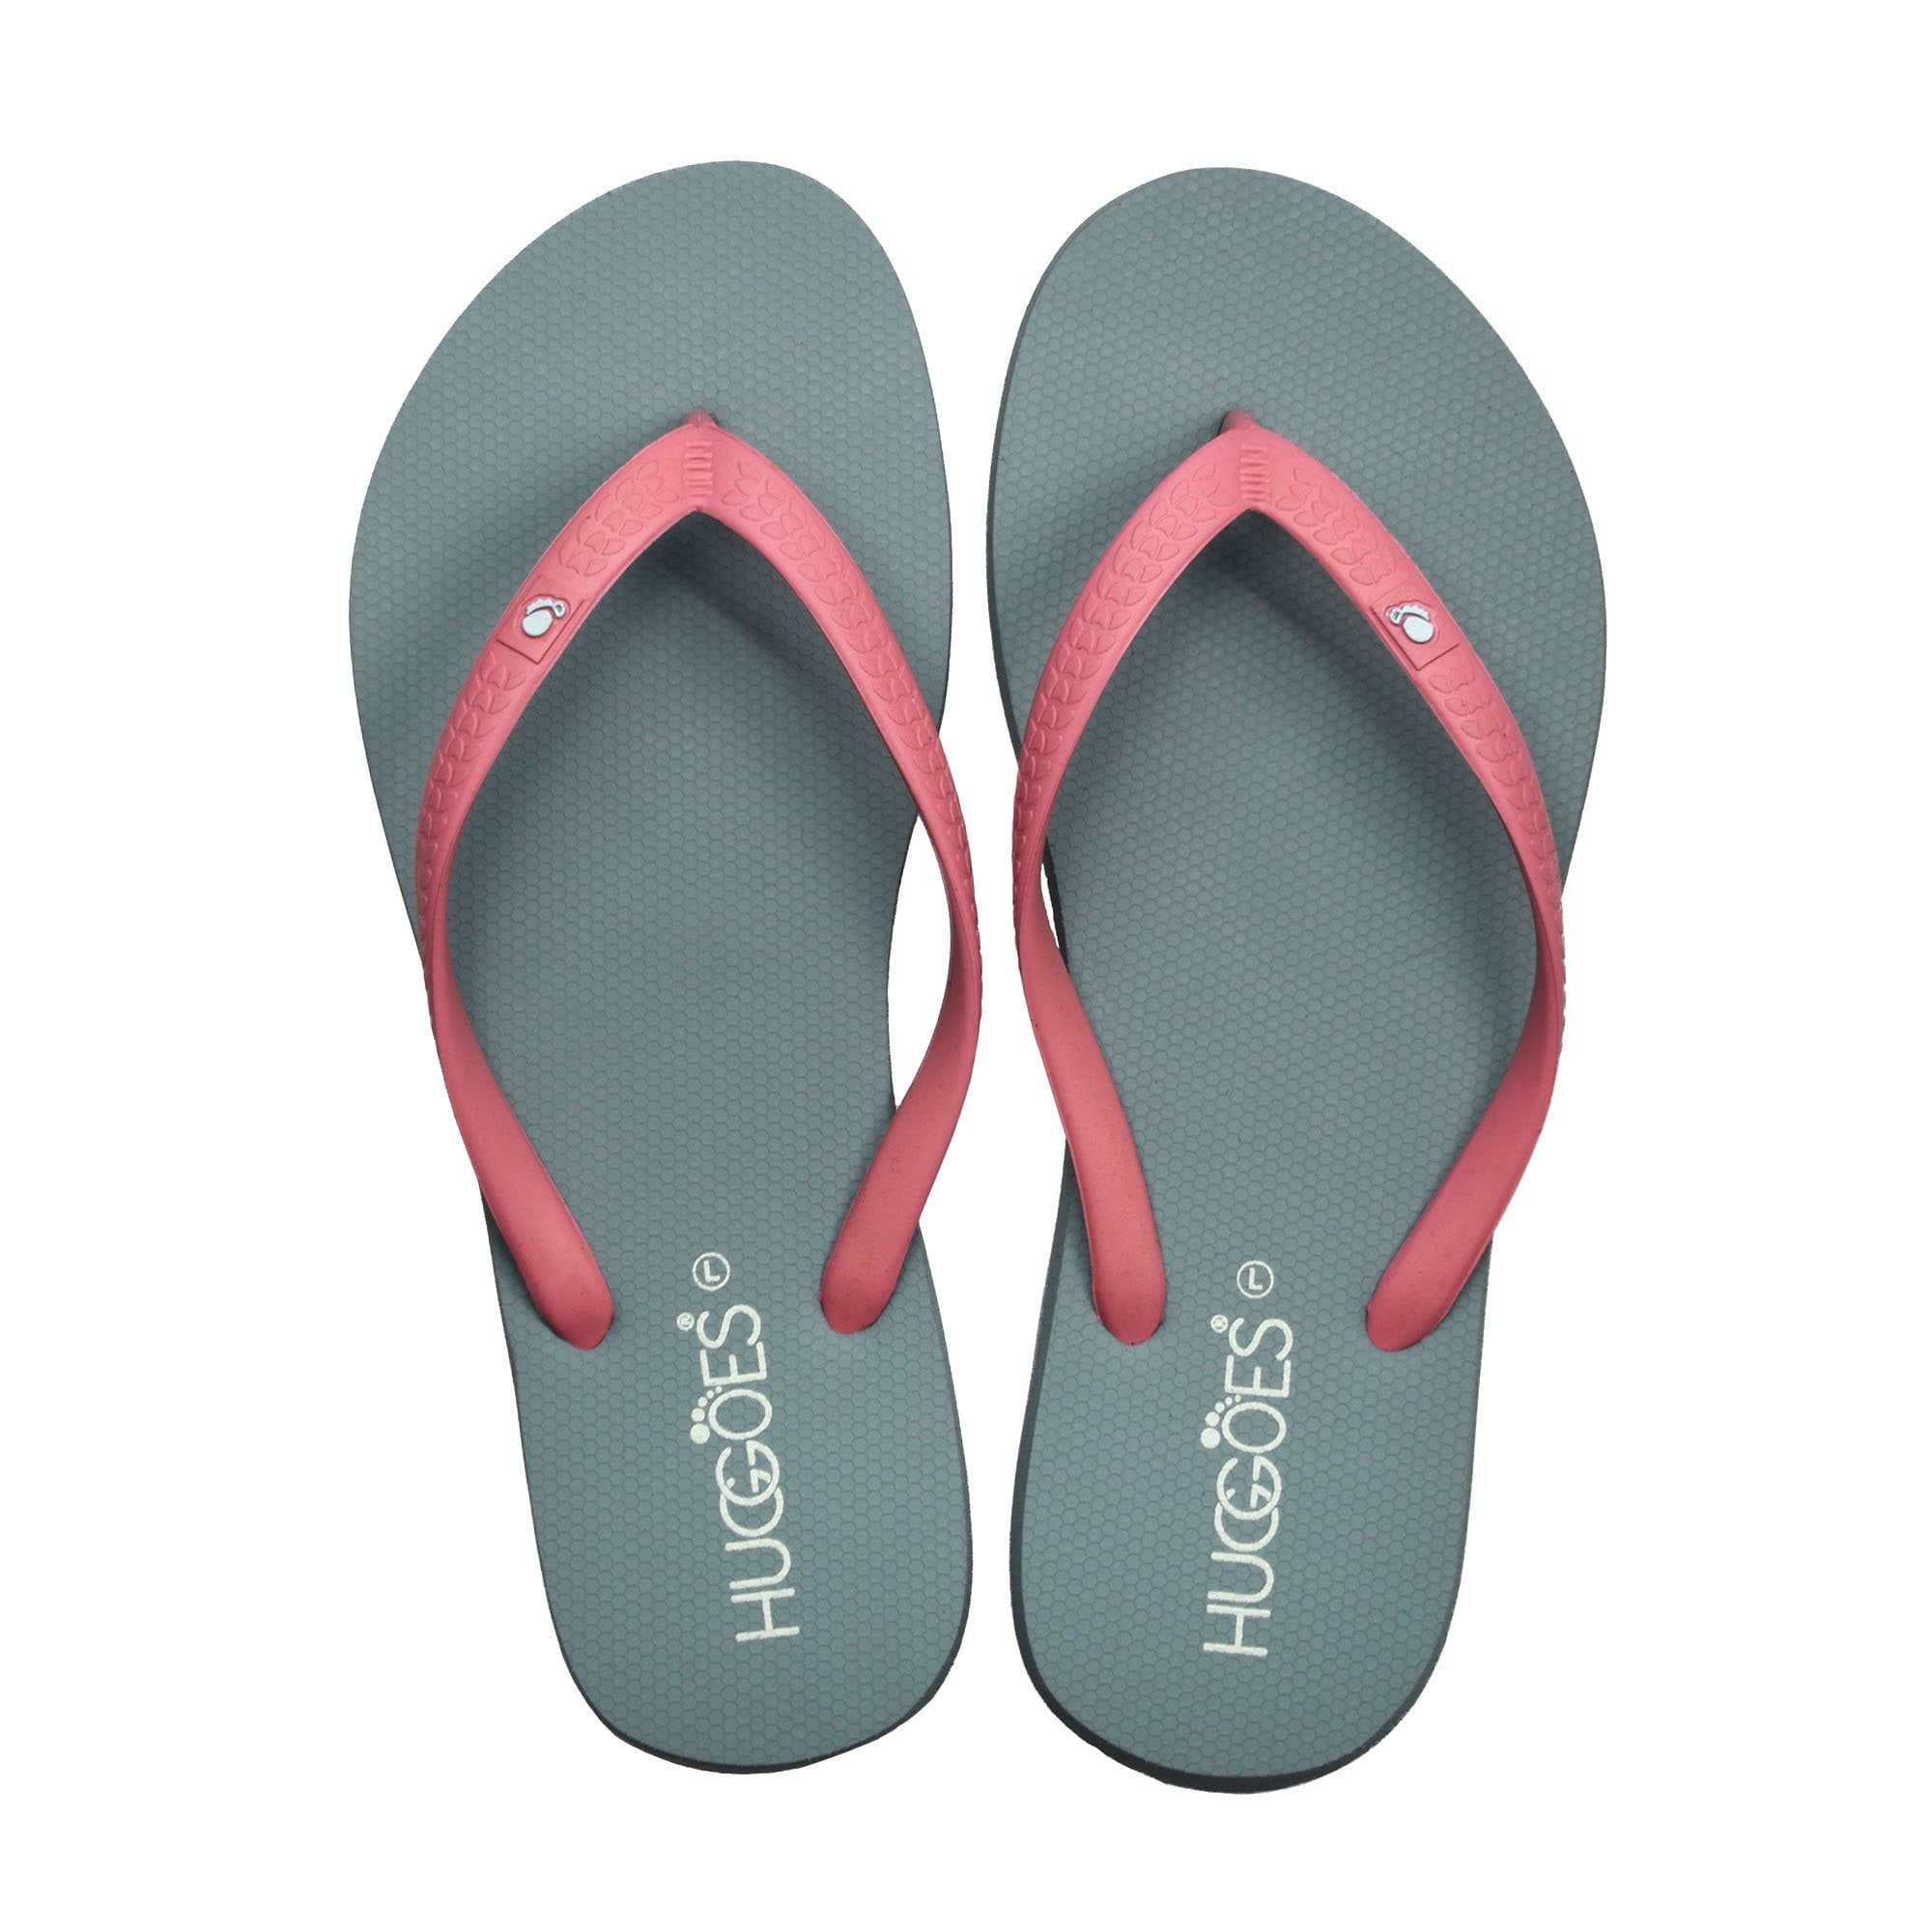 HUGGOES Tinted Natural Rubber Comfort Flip Flops for Women - Grey/Pink